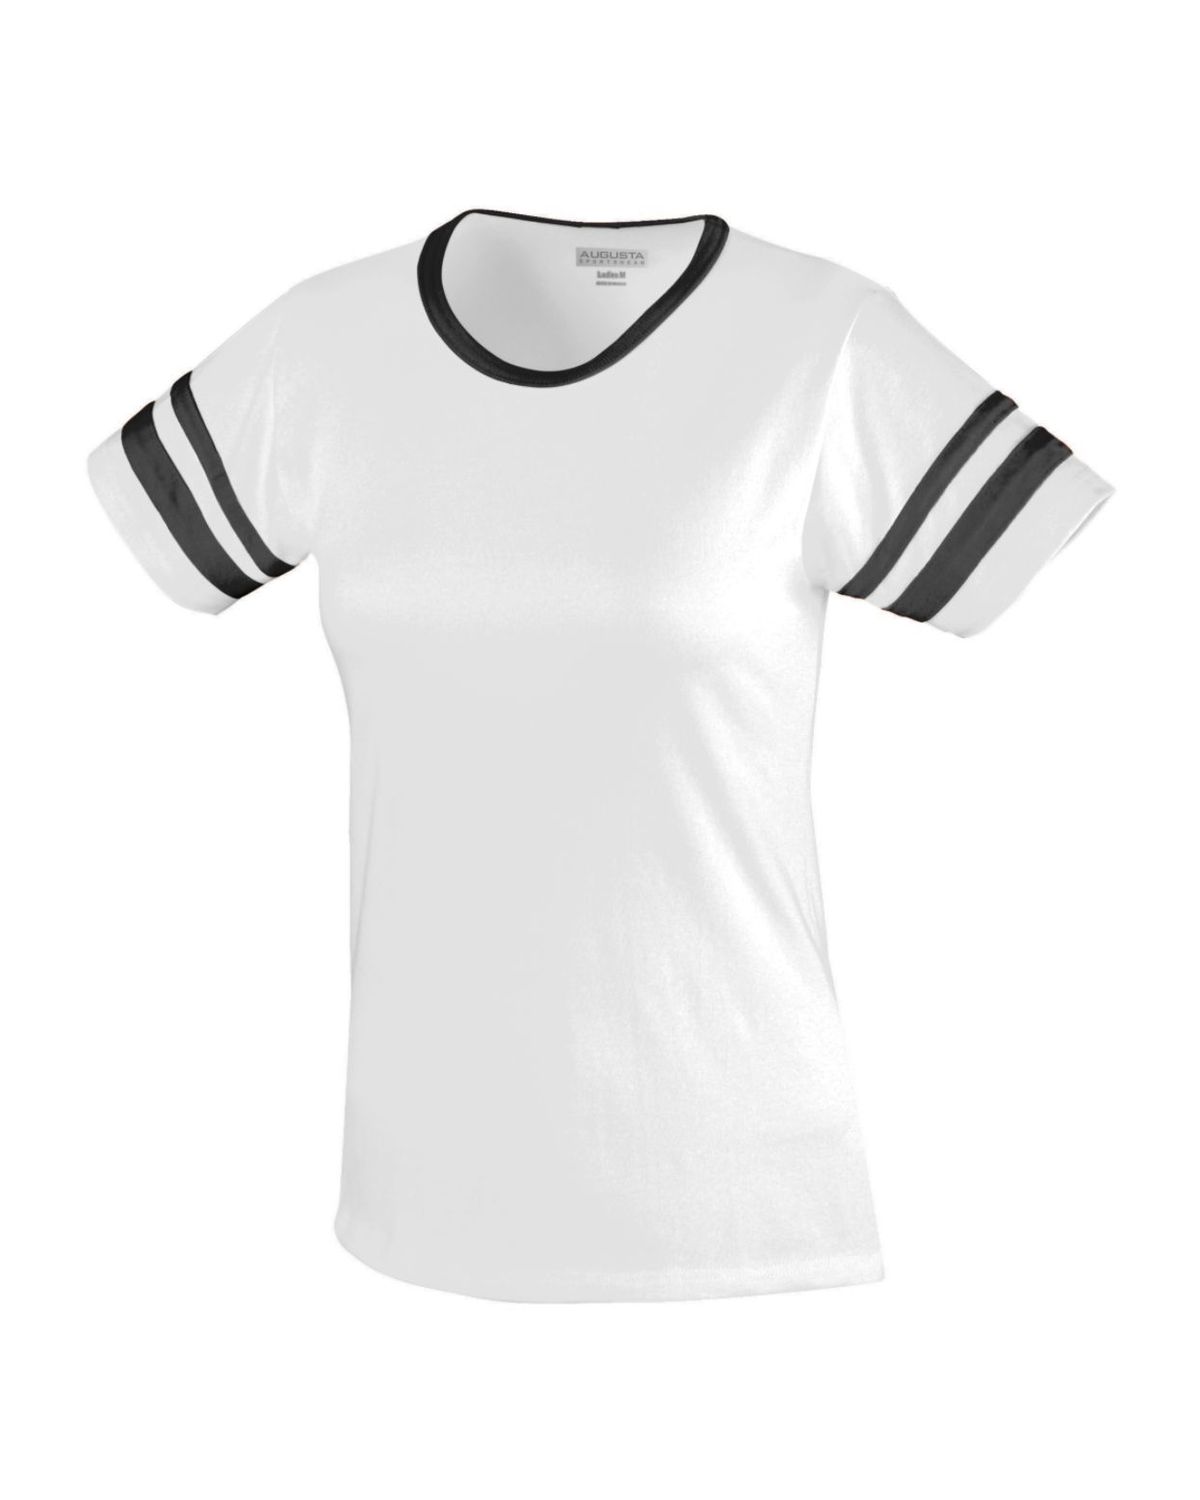 'Augusta Sportswear 1275-C Ladies Junior Fit Cotton/Spandex Camp Tee'